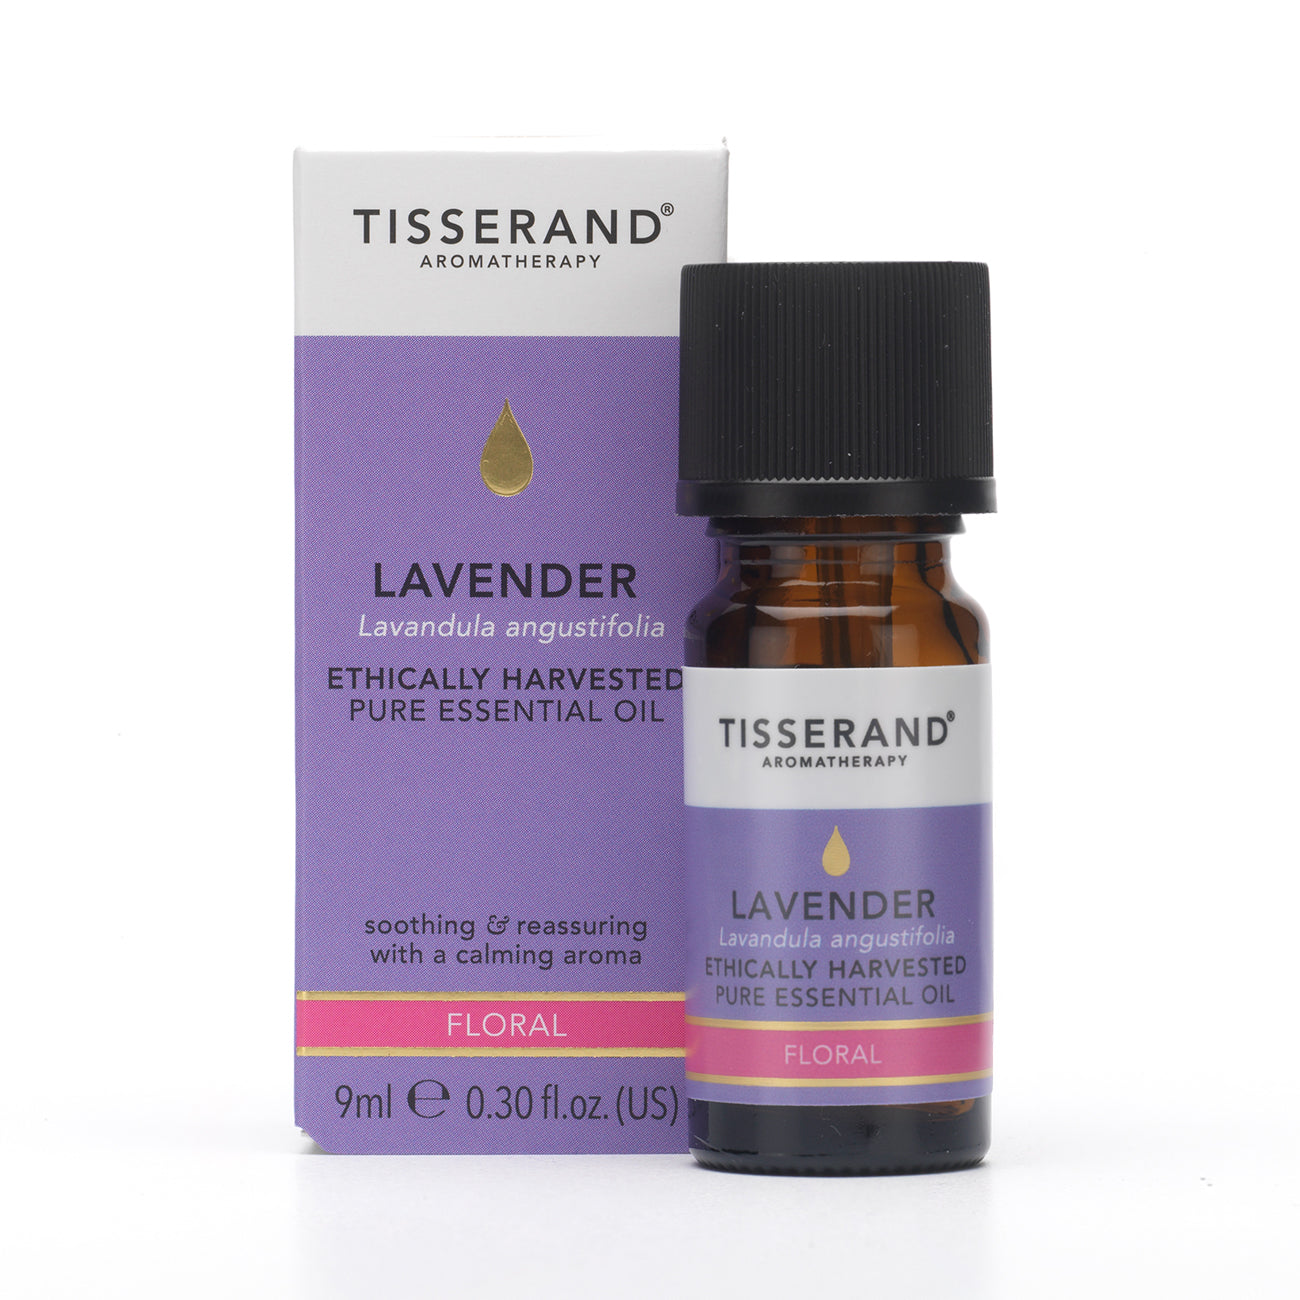 Tisserand Aromatherapy Lavender Organic Pure Essential Oil